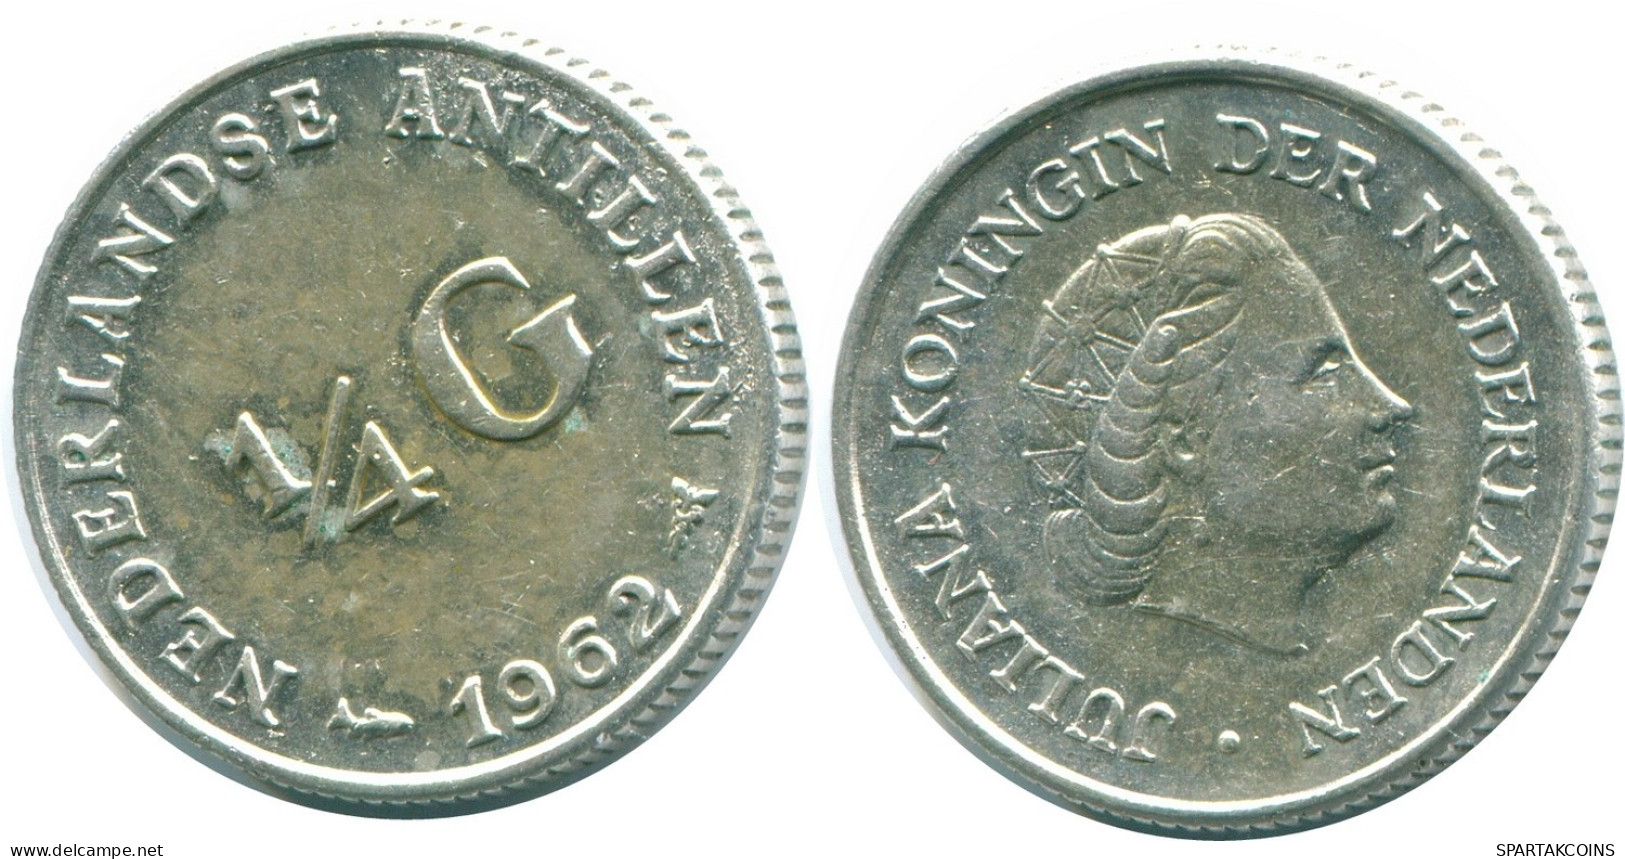 1/4 GULDEN 1962 NETHERLANDS ANTILLES SILVER Colonial Coin #NL11105.4.U.A - Niederländische Antillen